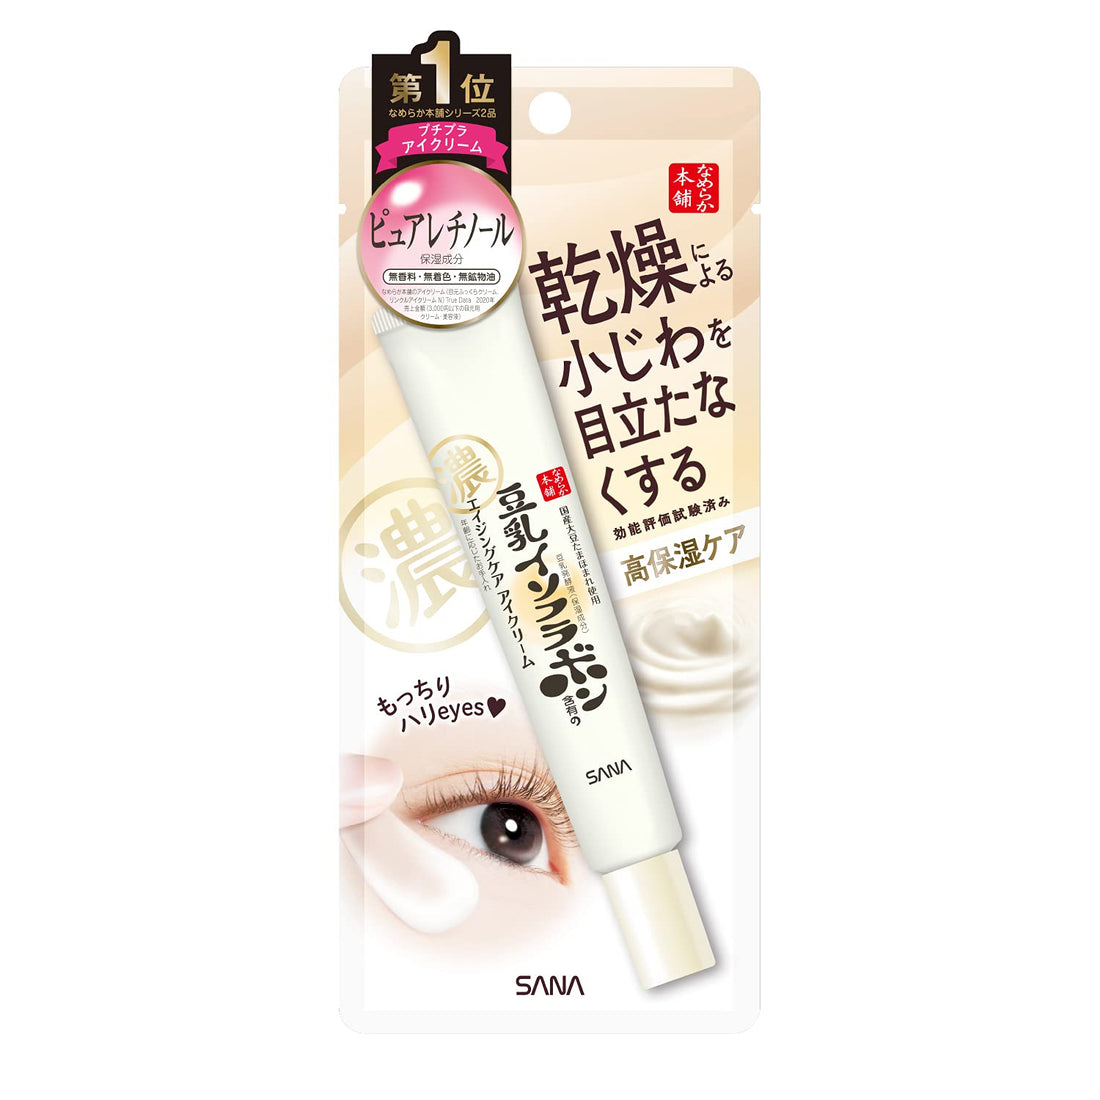 Sana Nameraka Honpo Soy Milk isoflavone Wrinkle Eye Cream